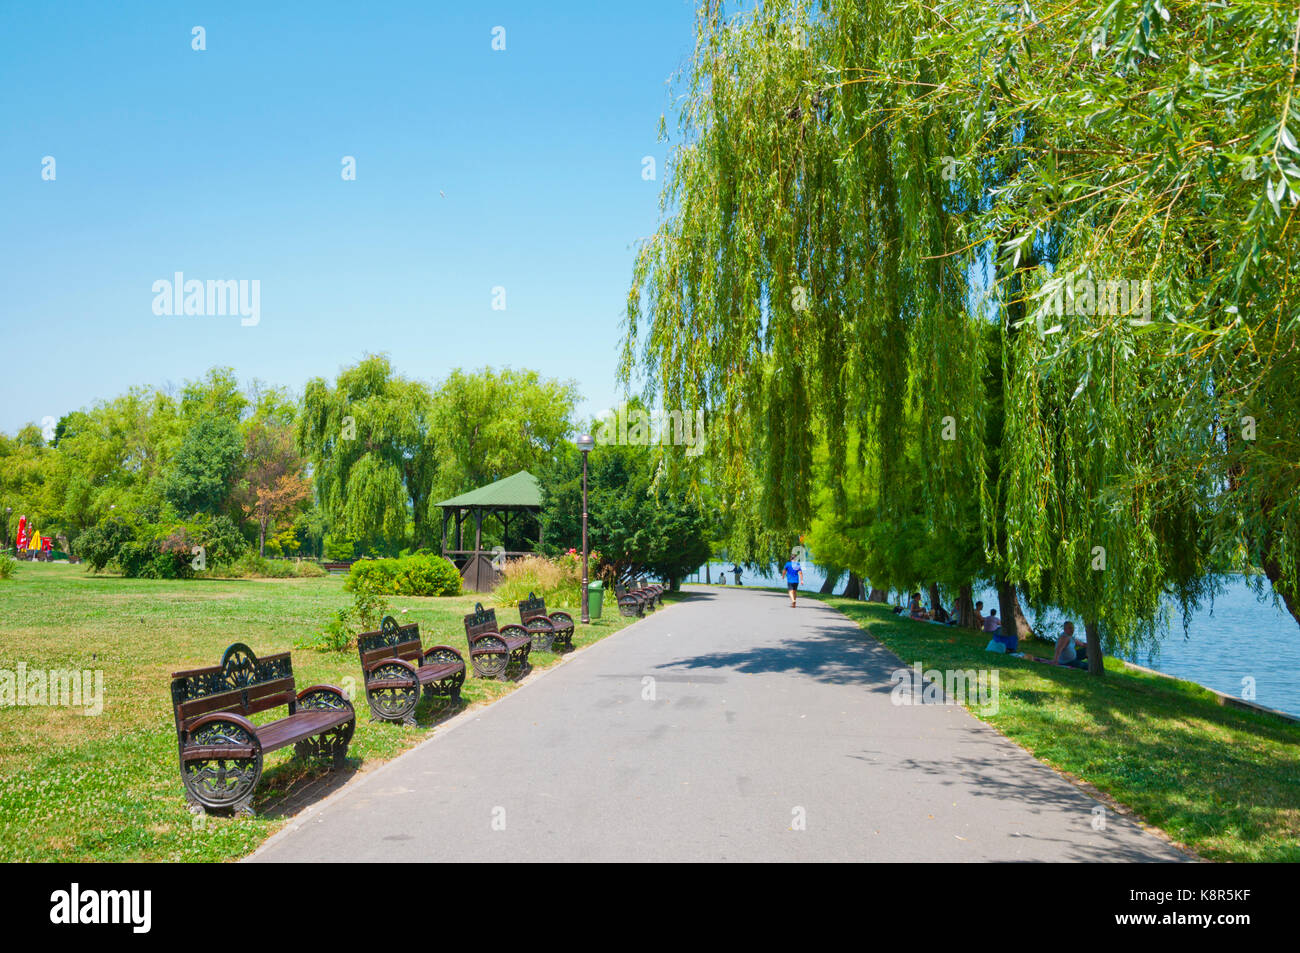 Parcul Herastrau, park, Bucharest, Romania Stock Photo